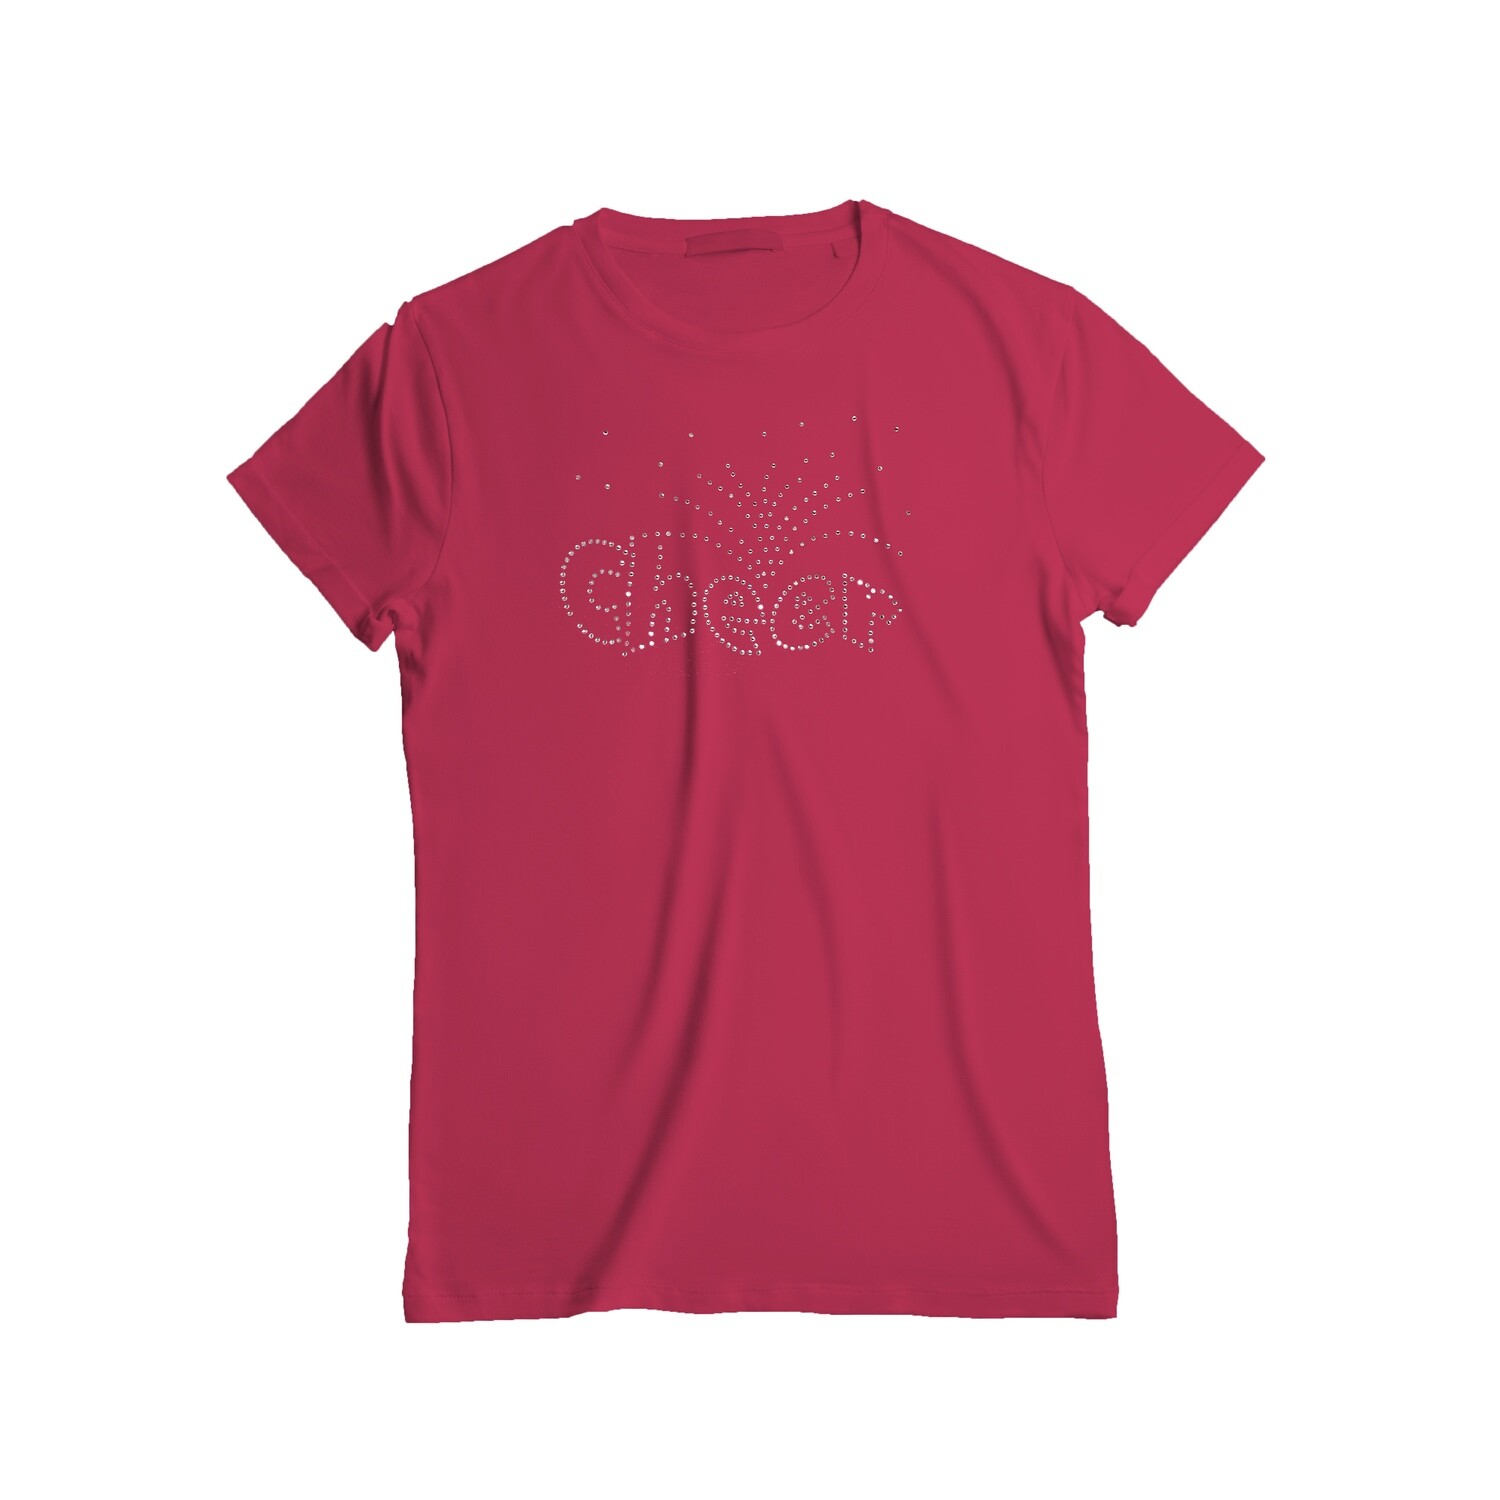 Cheer Sparkle T-Shirt